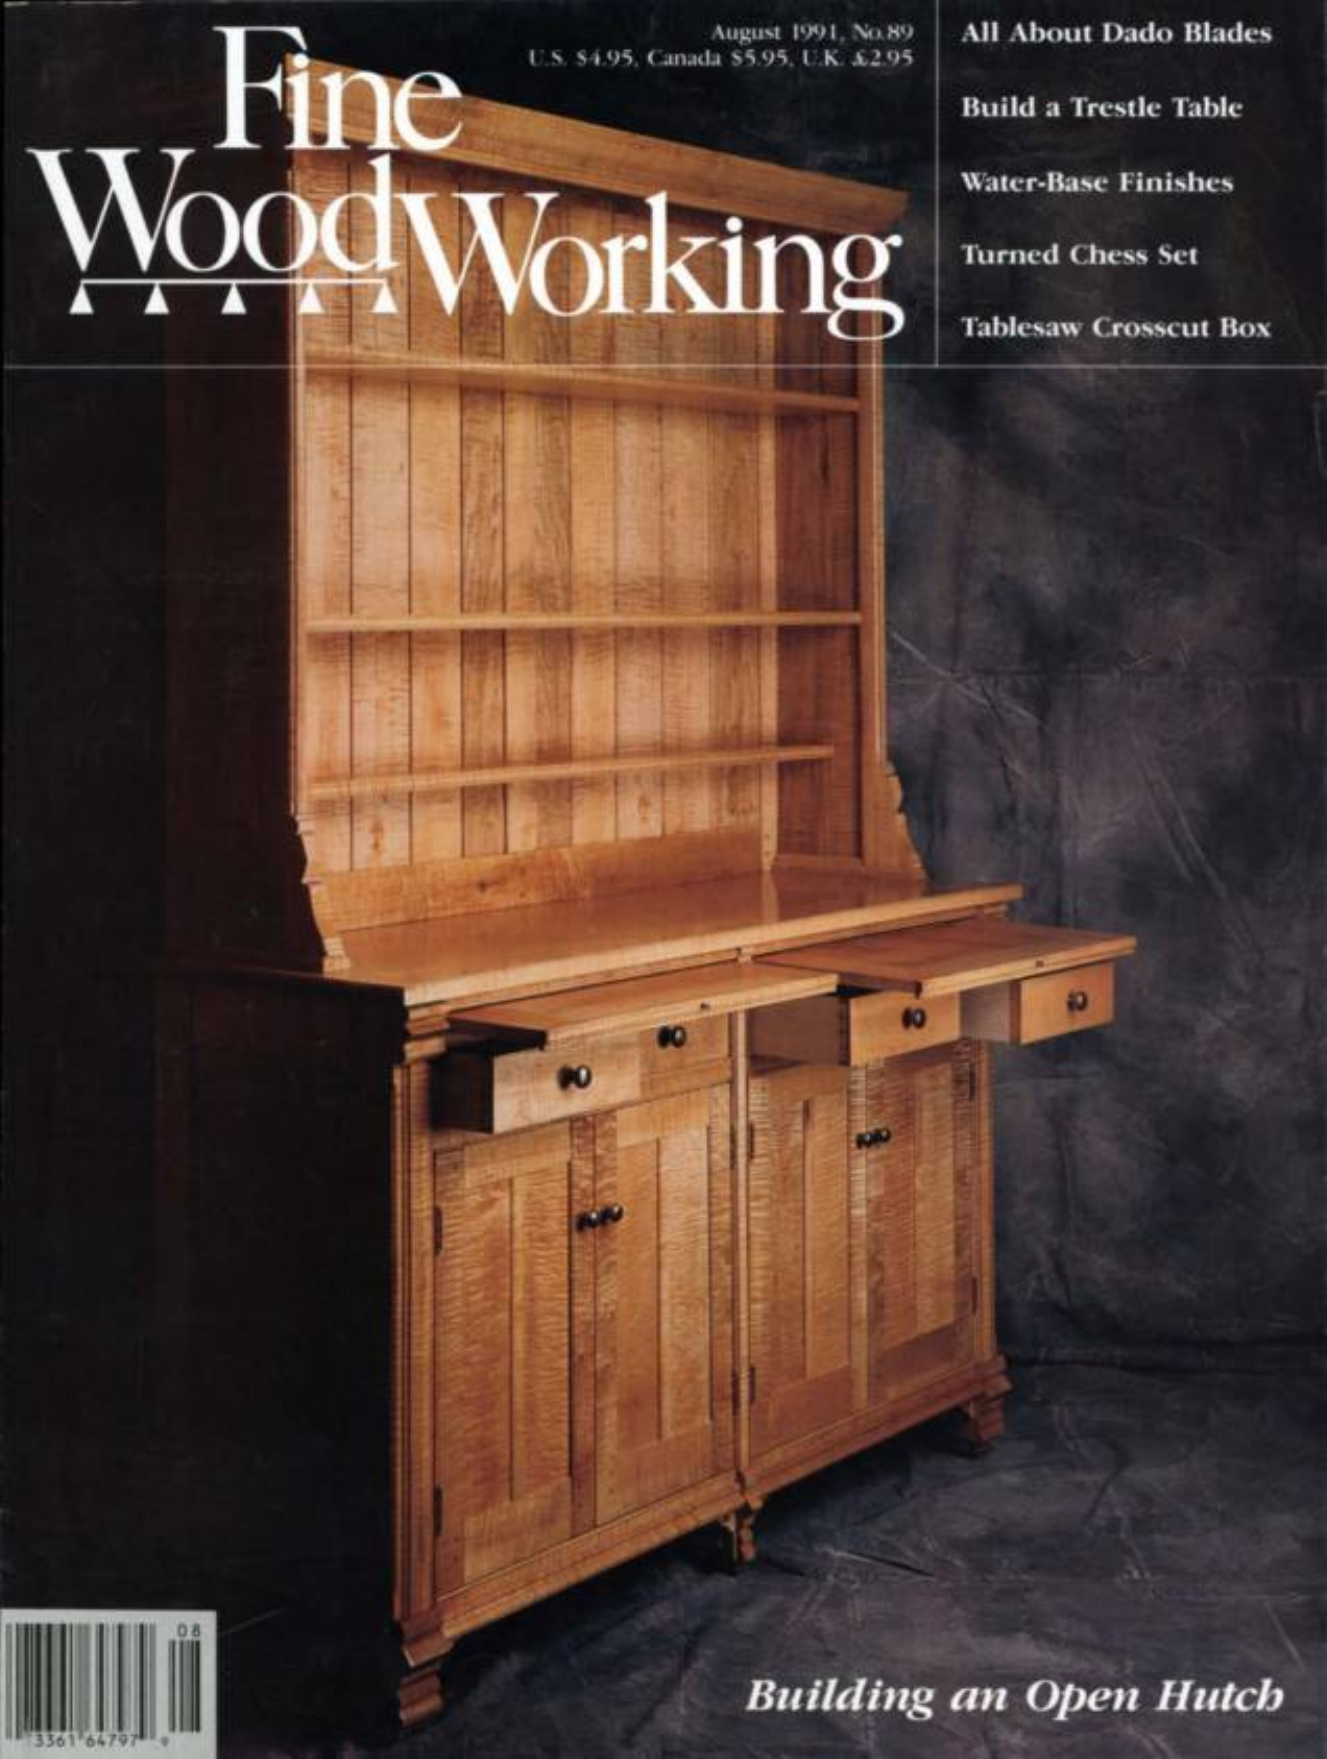 Large Oval Alder Wooden Blanks For Engravers Lot of 50-5/32" Drilled Hole 